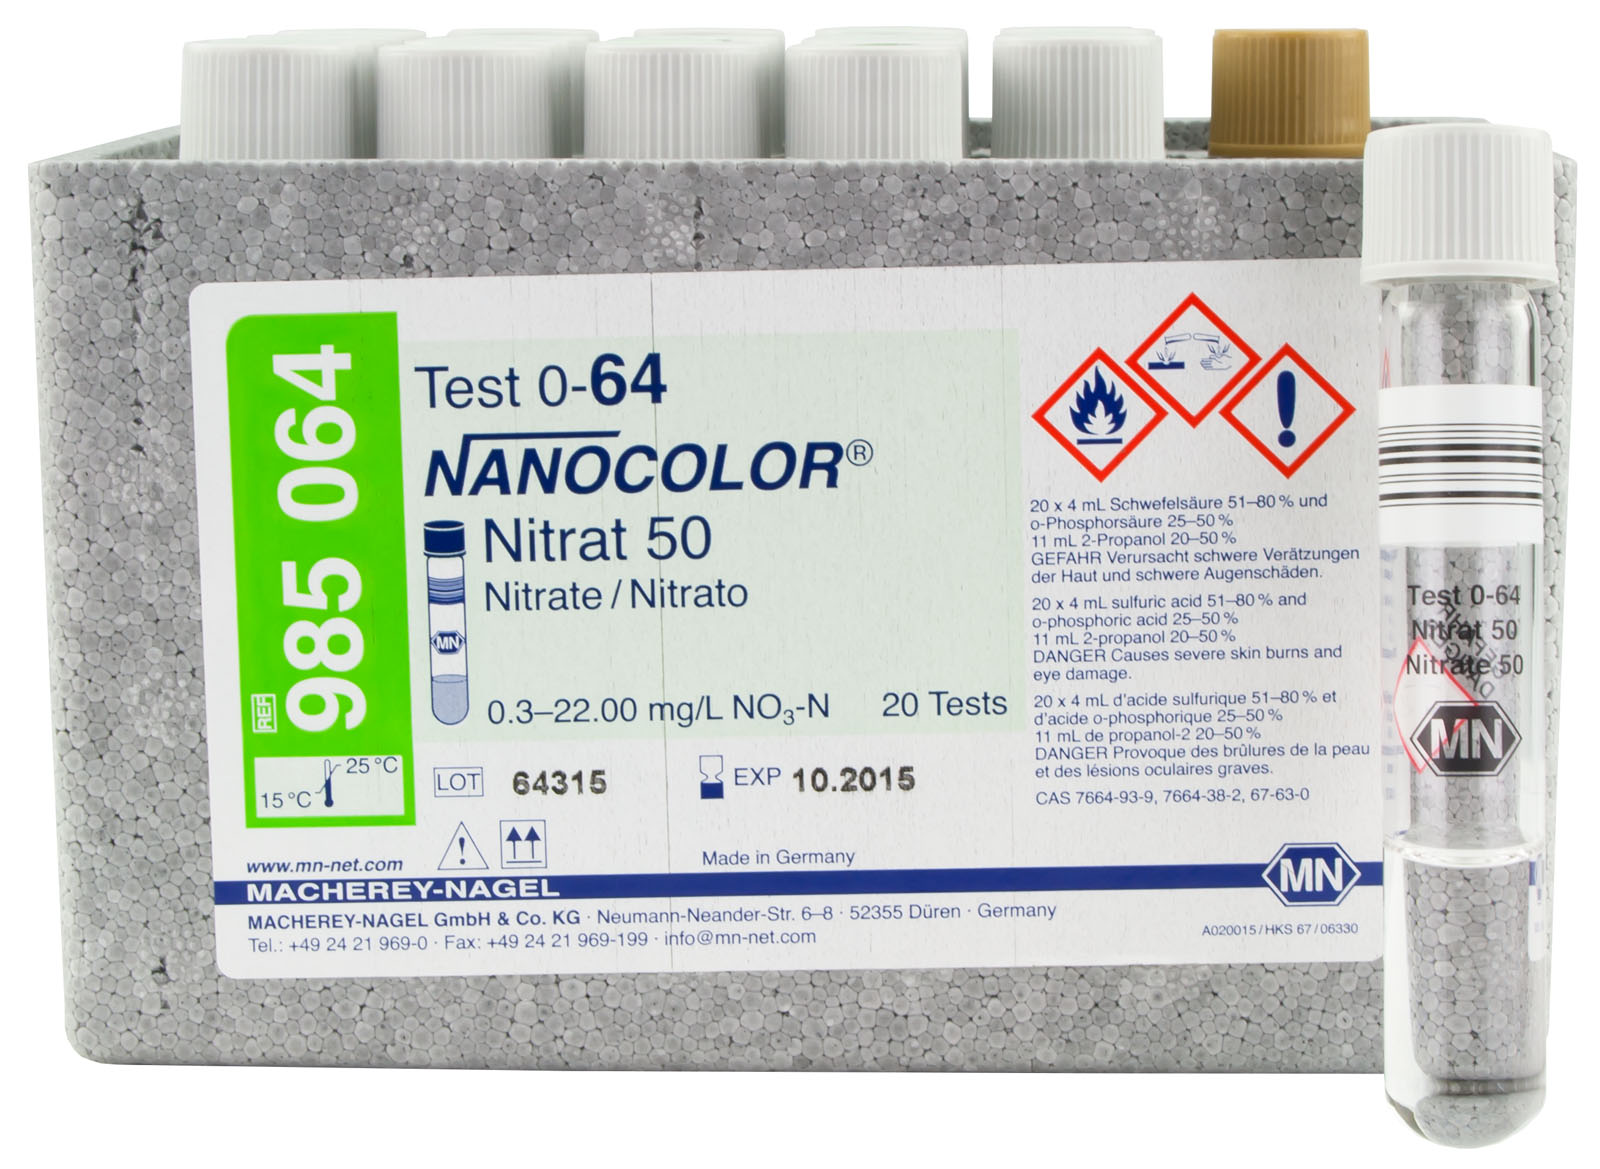 RUK NANOCOLOR- Nitrat 50 Test